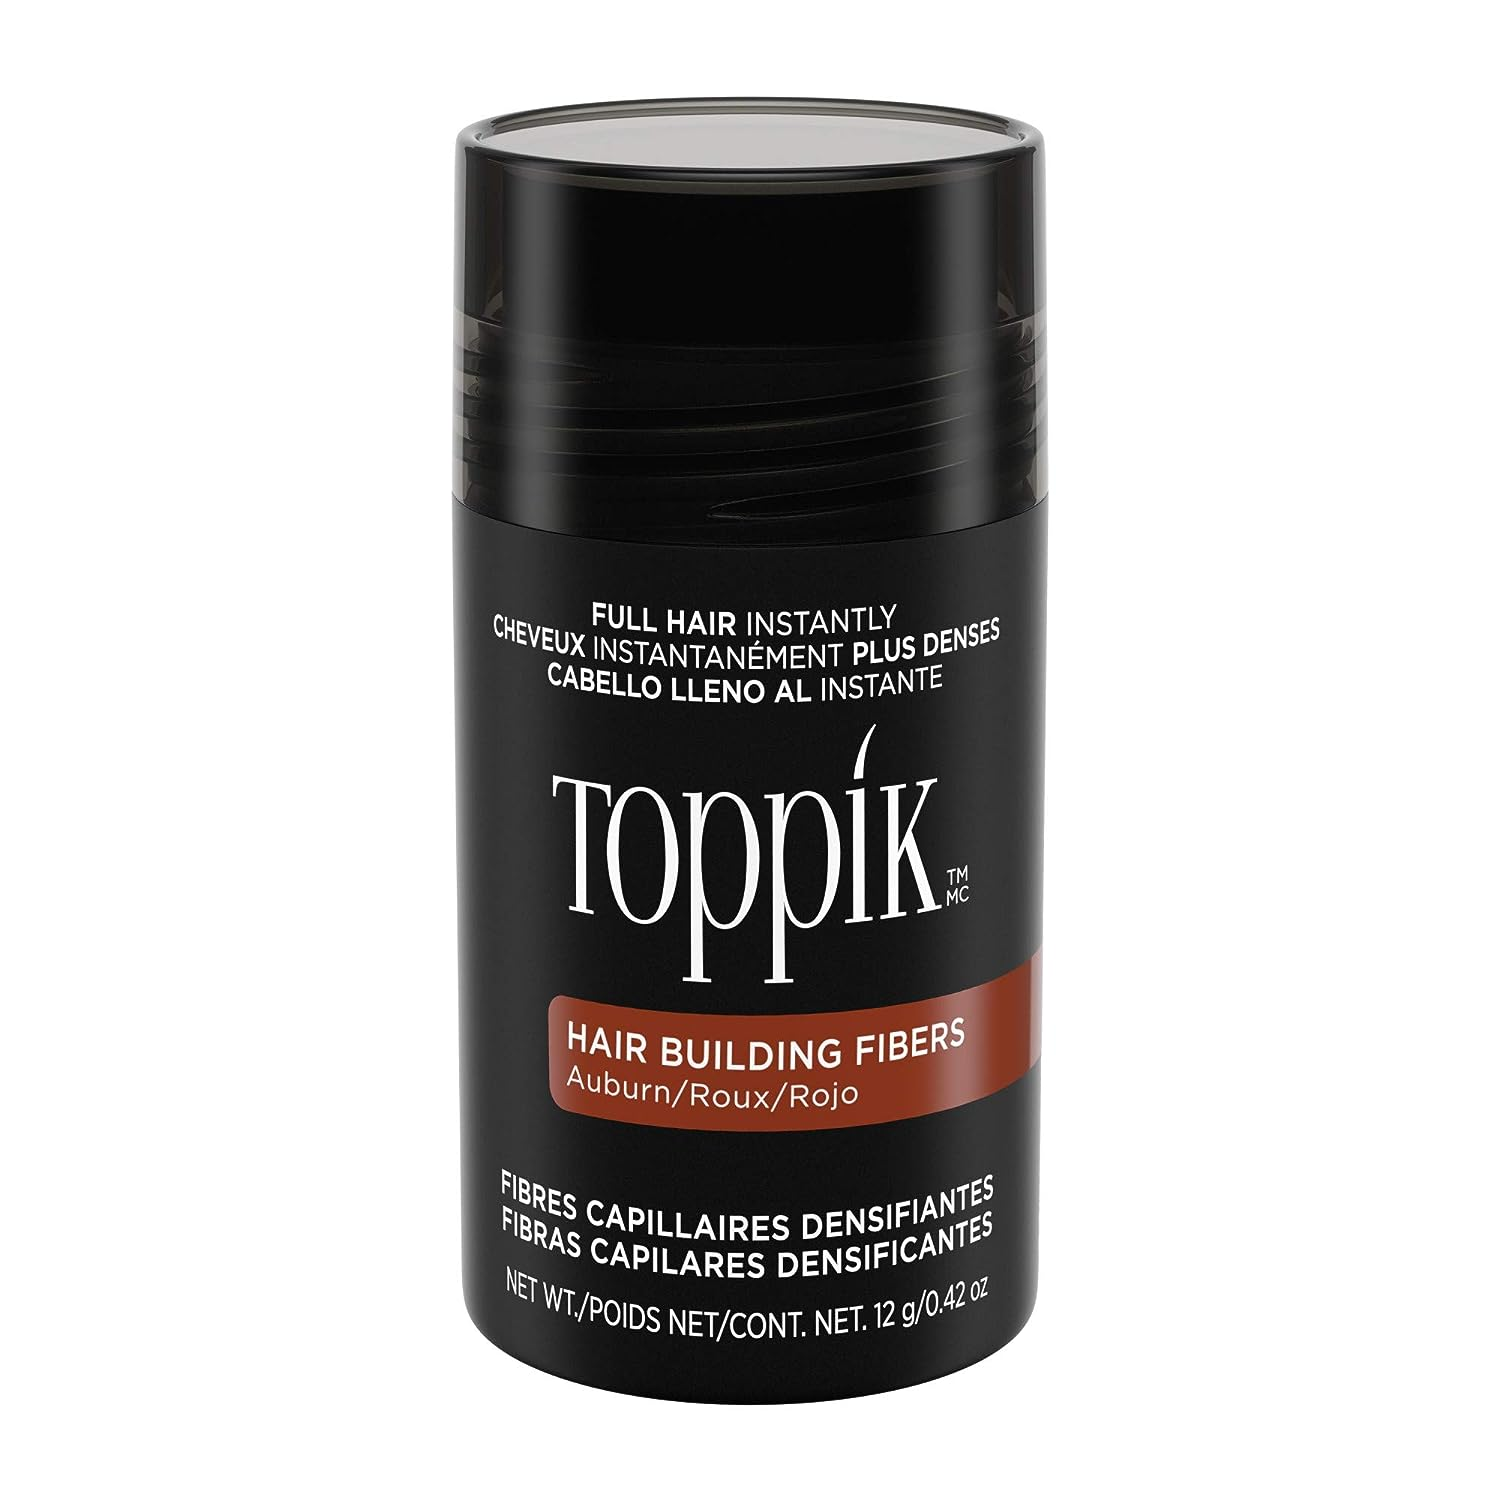 Product image for Toppik Hair Building Fibers hair makeup, a kind of hair makeup 